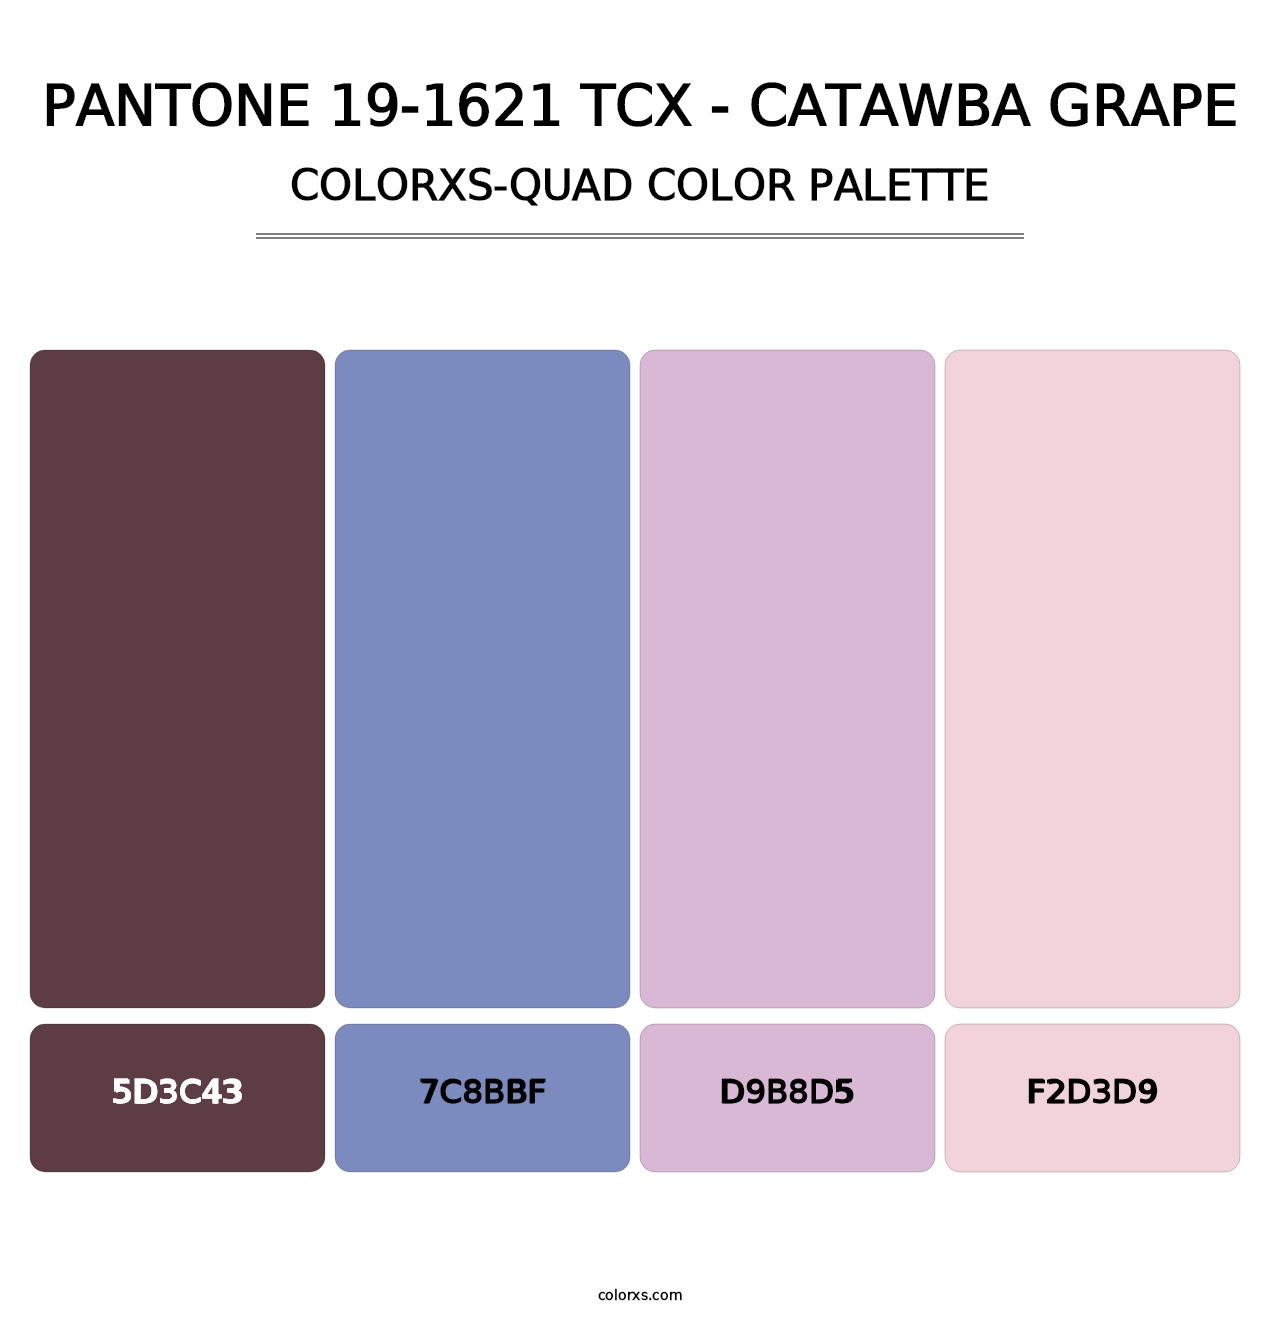 PANTONE 19-1621 TCX - Catawba Grape - Colorxs Quad Palette